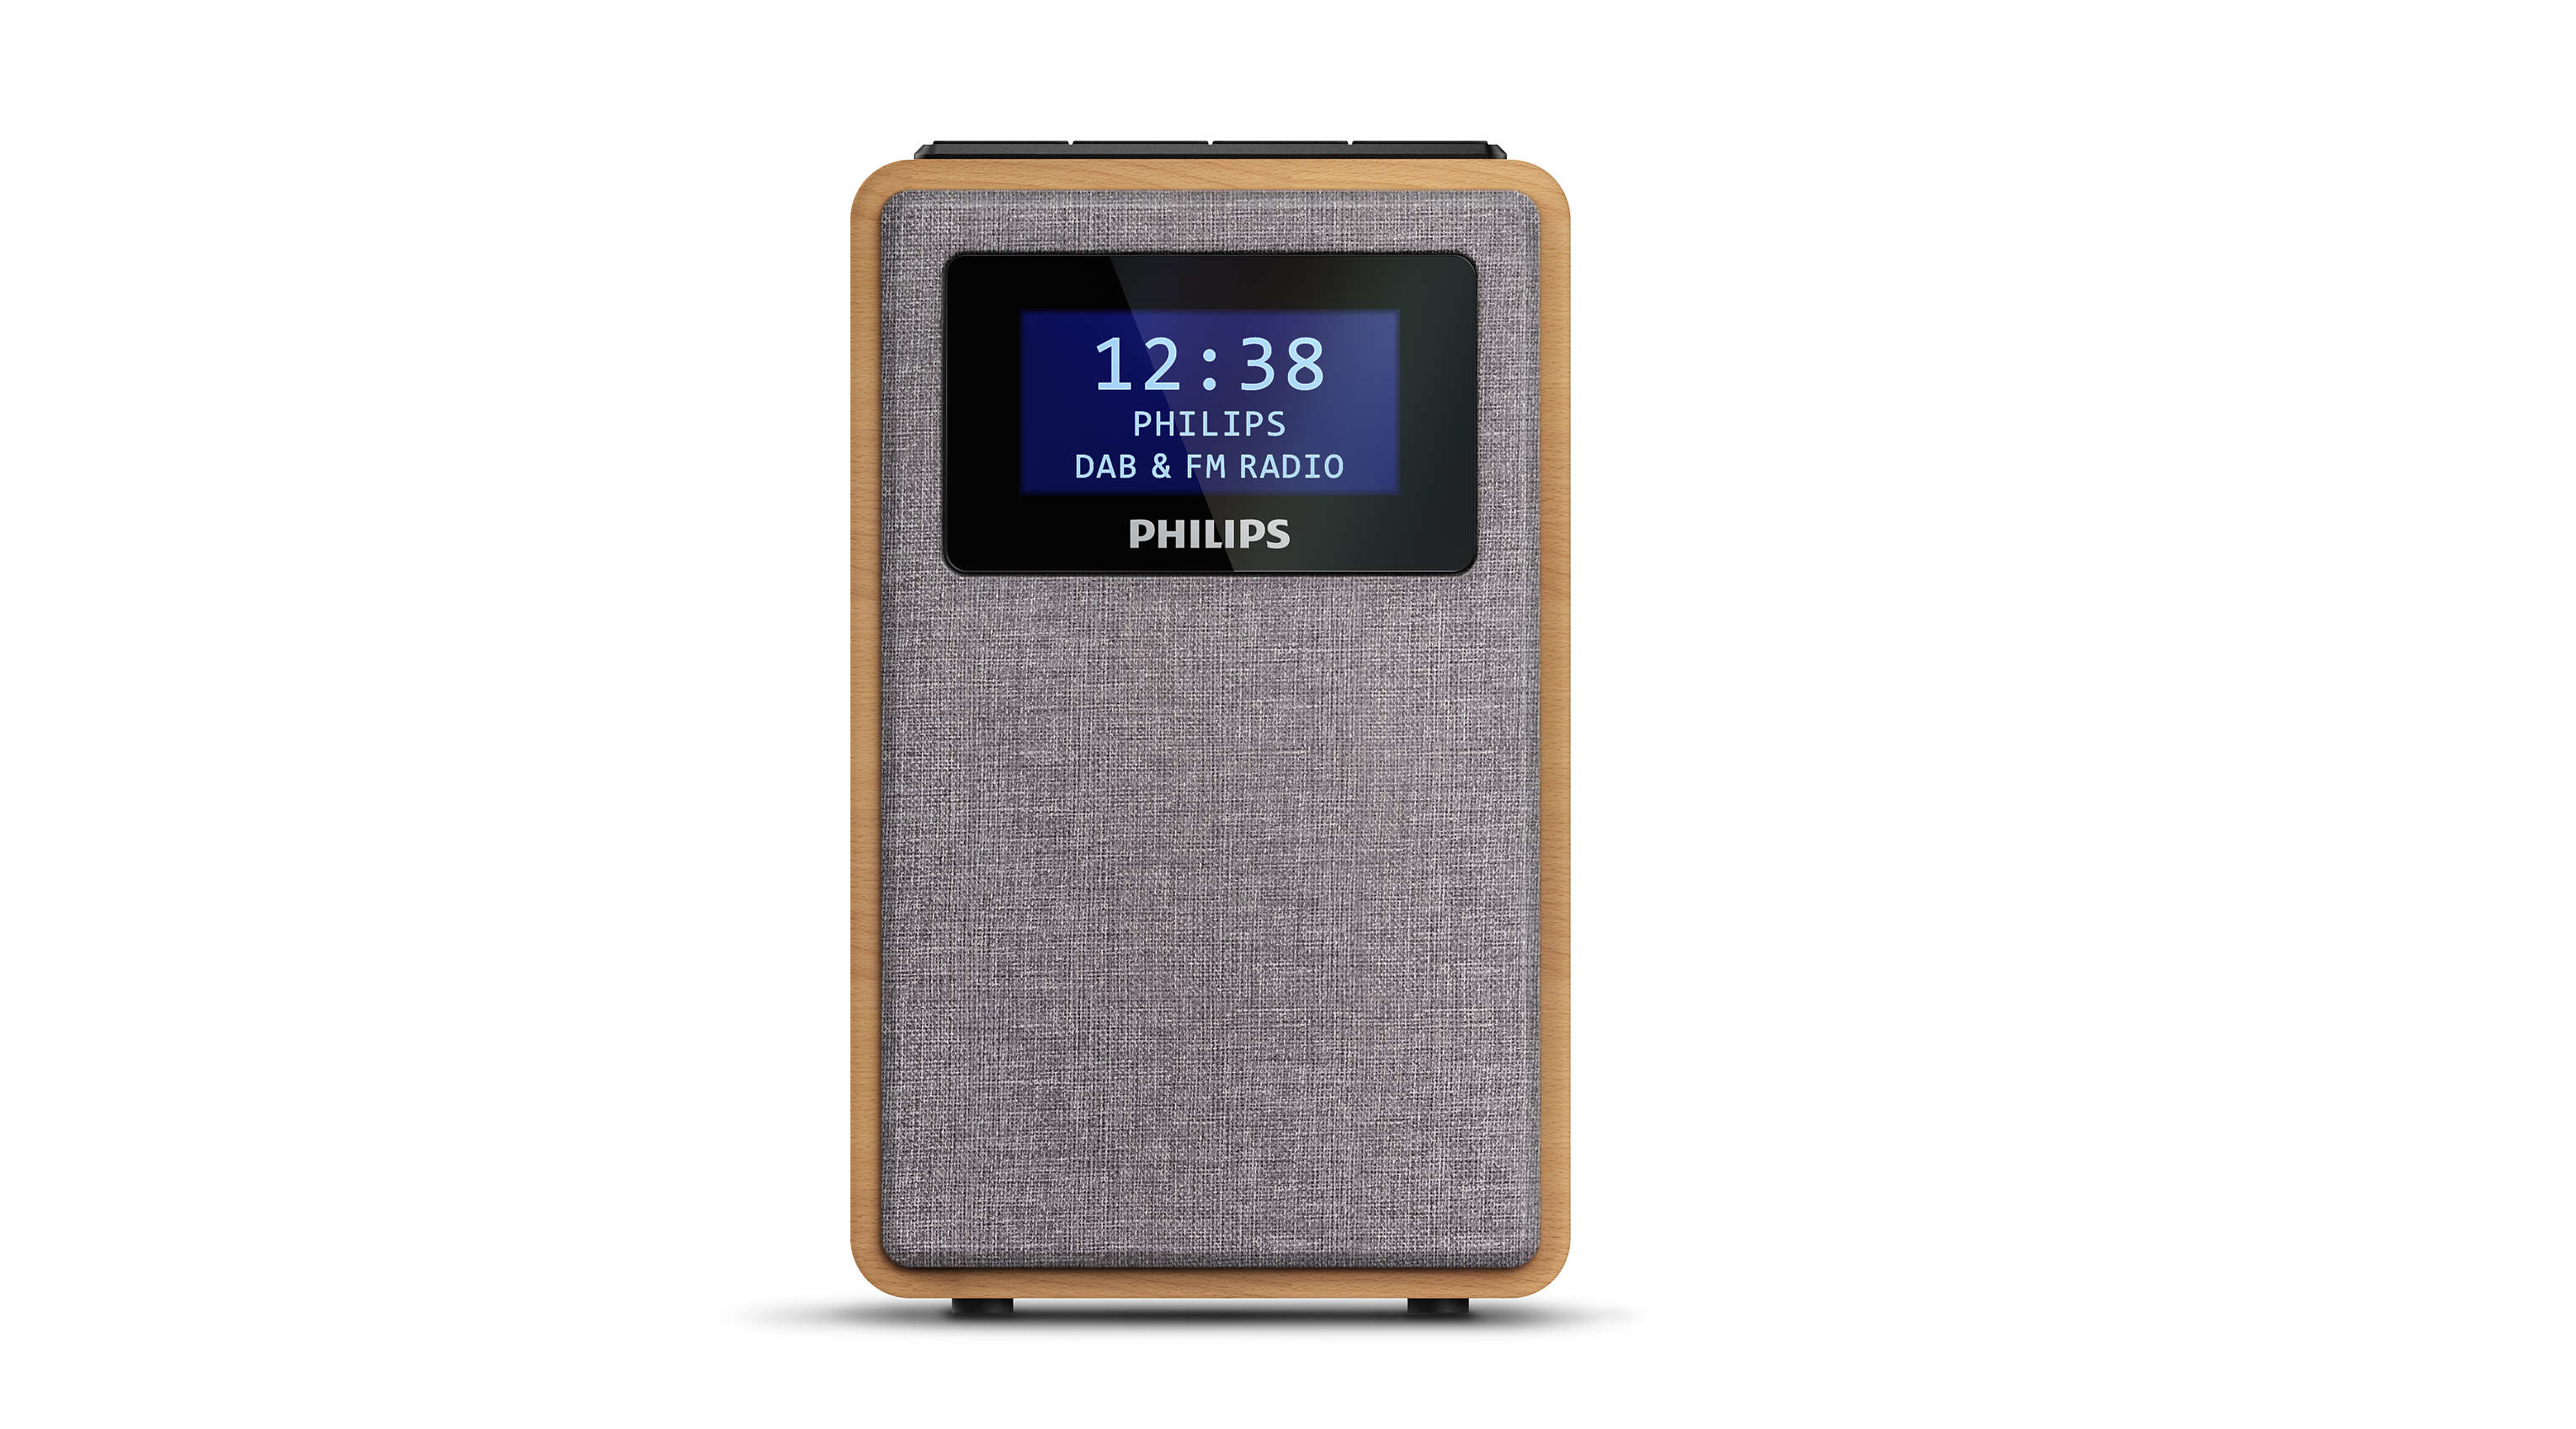 Philips TAR5005/10 Radio Uhr Digital Grau, Holz